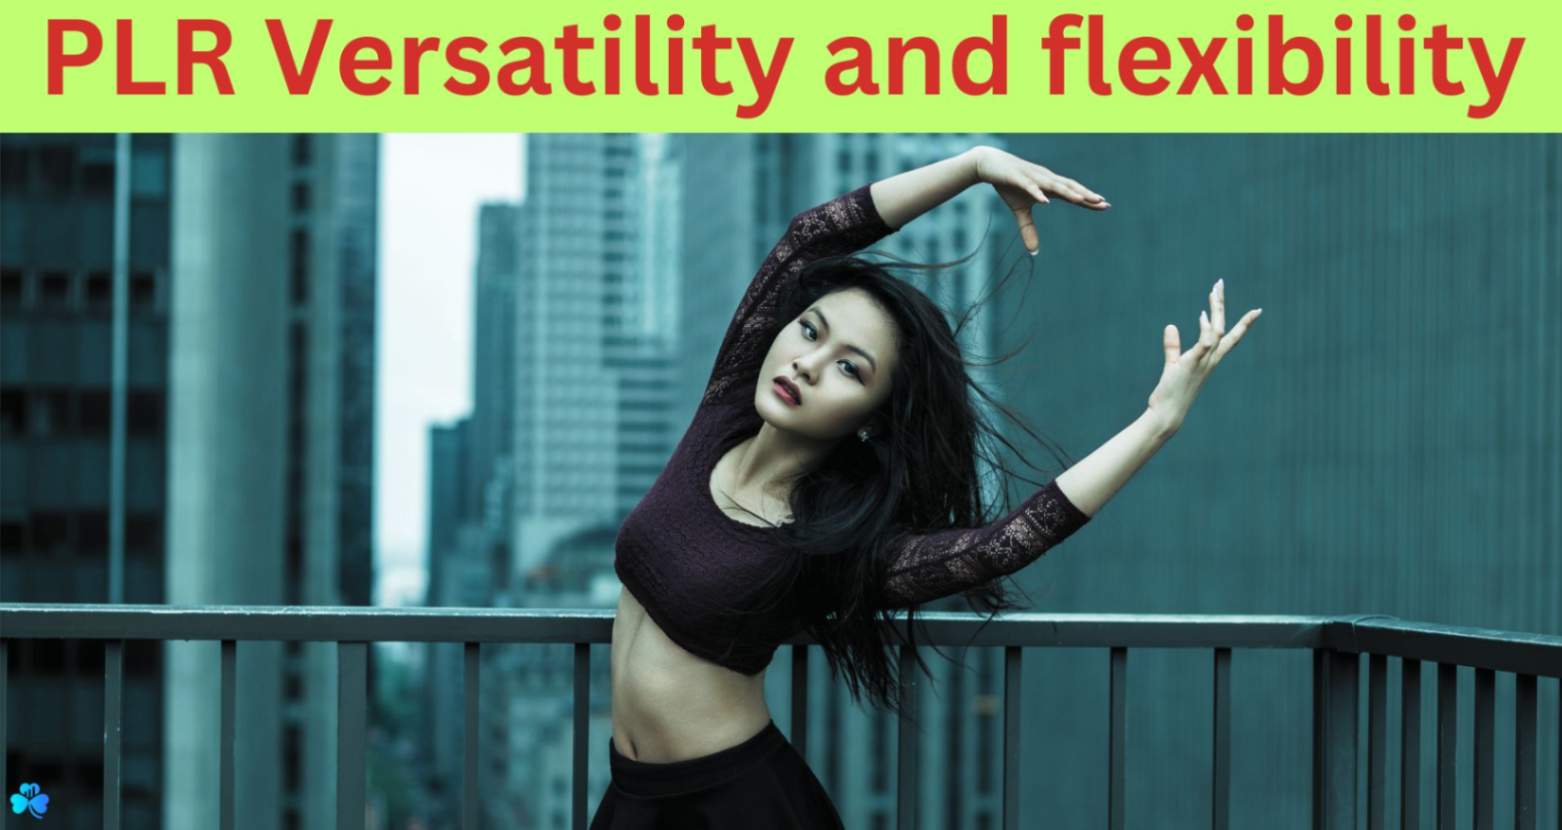 Versatility and flexibility